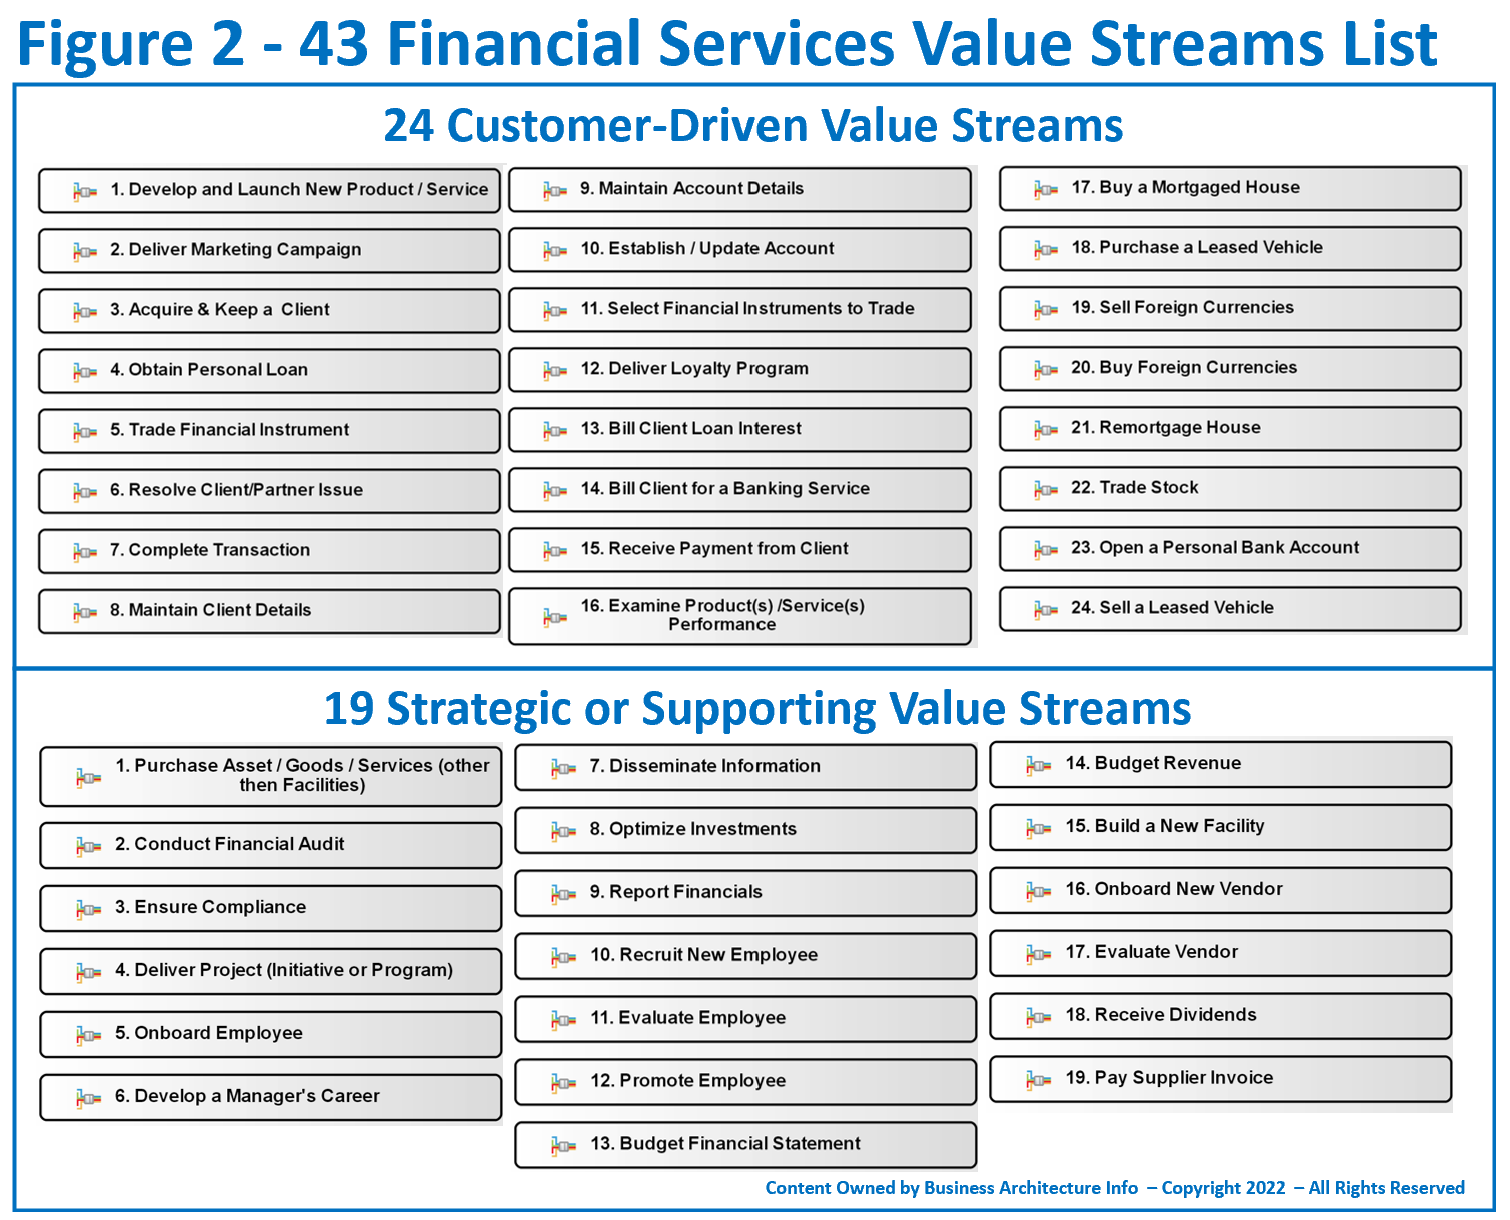 Value Stream List